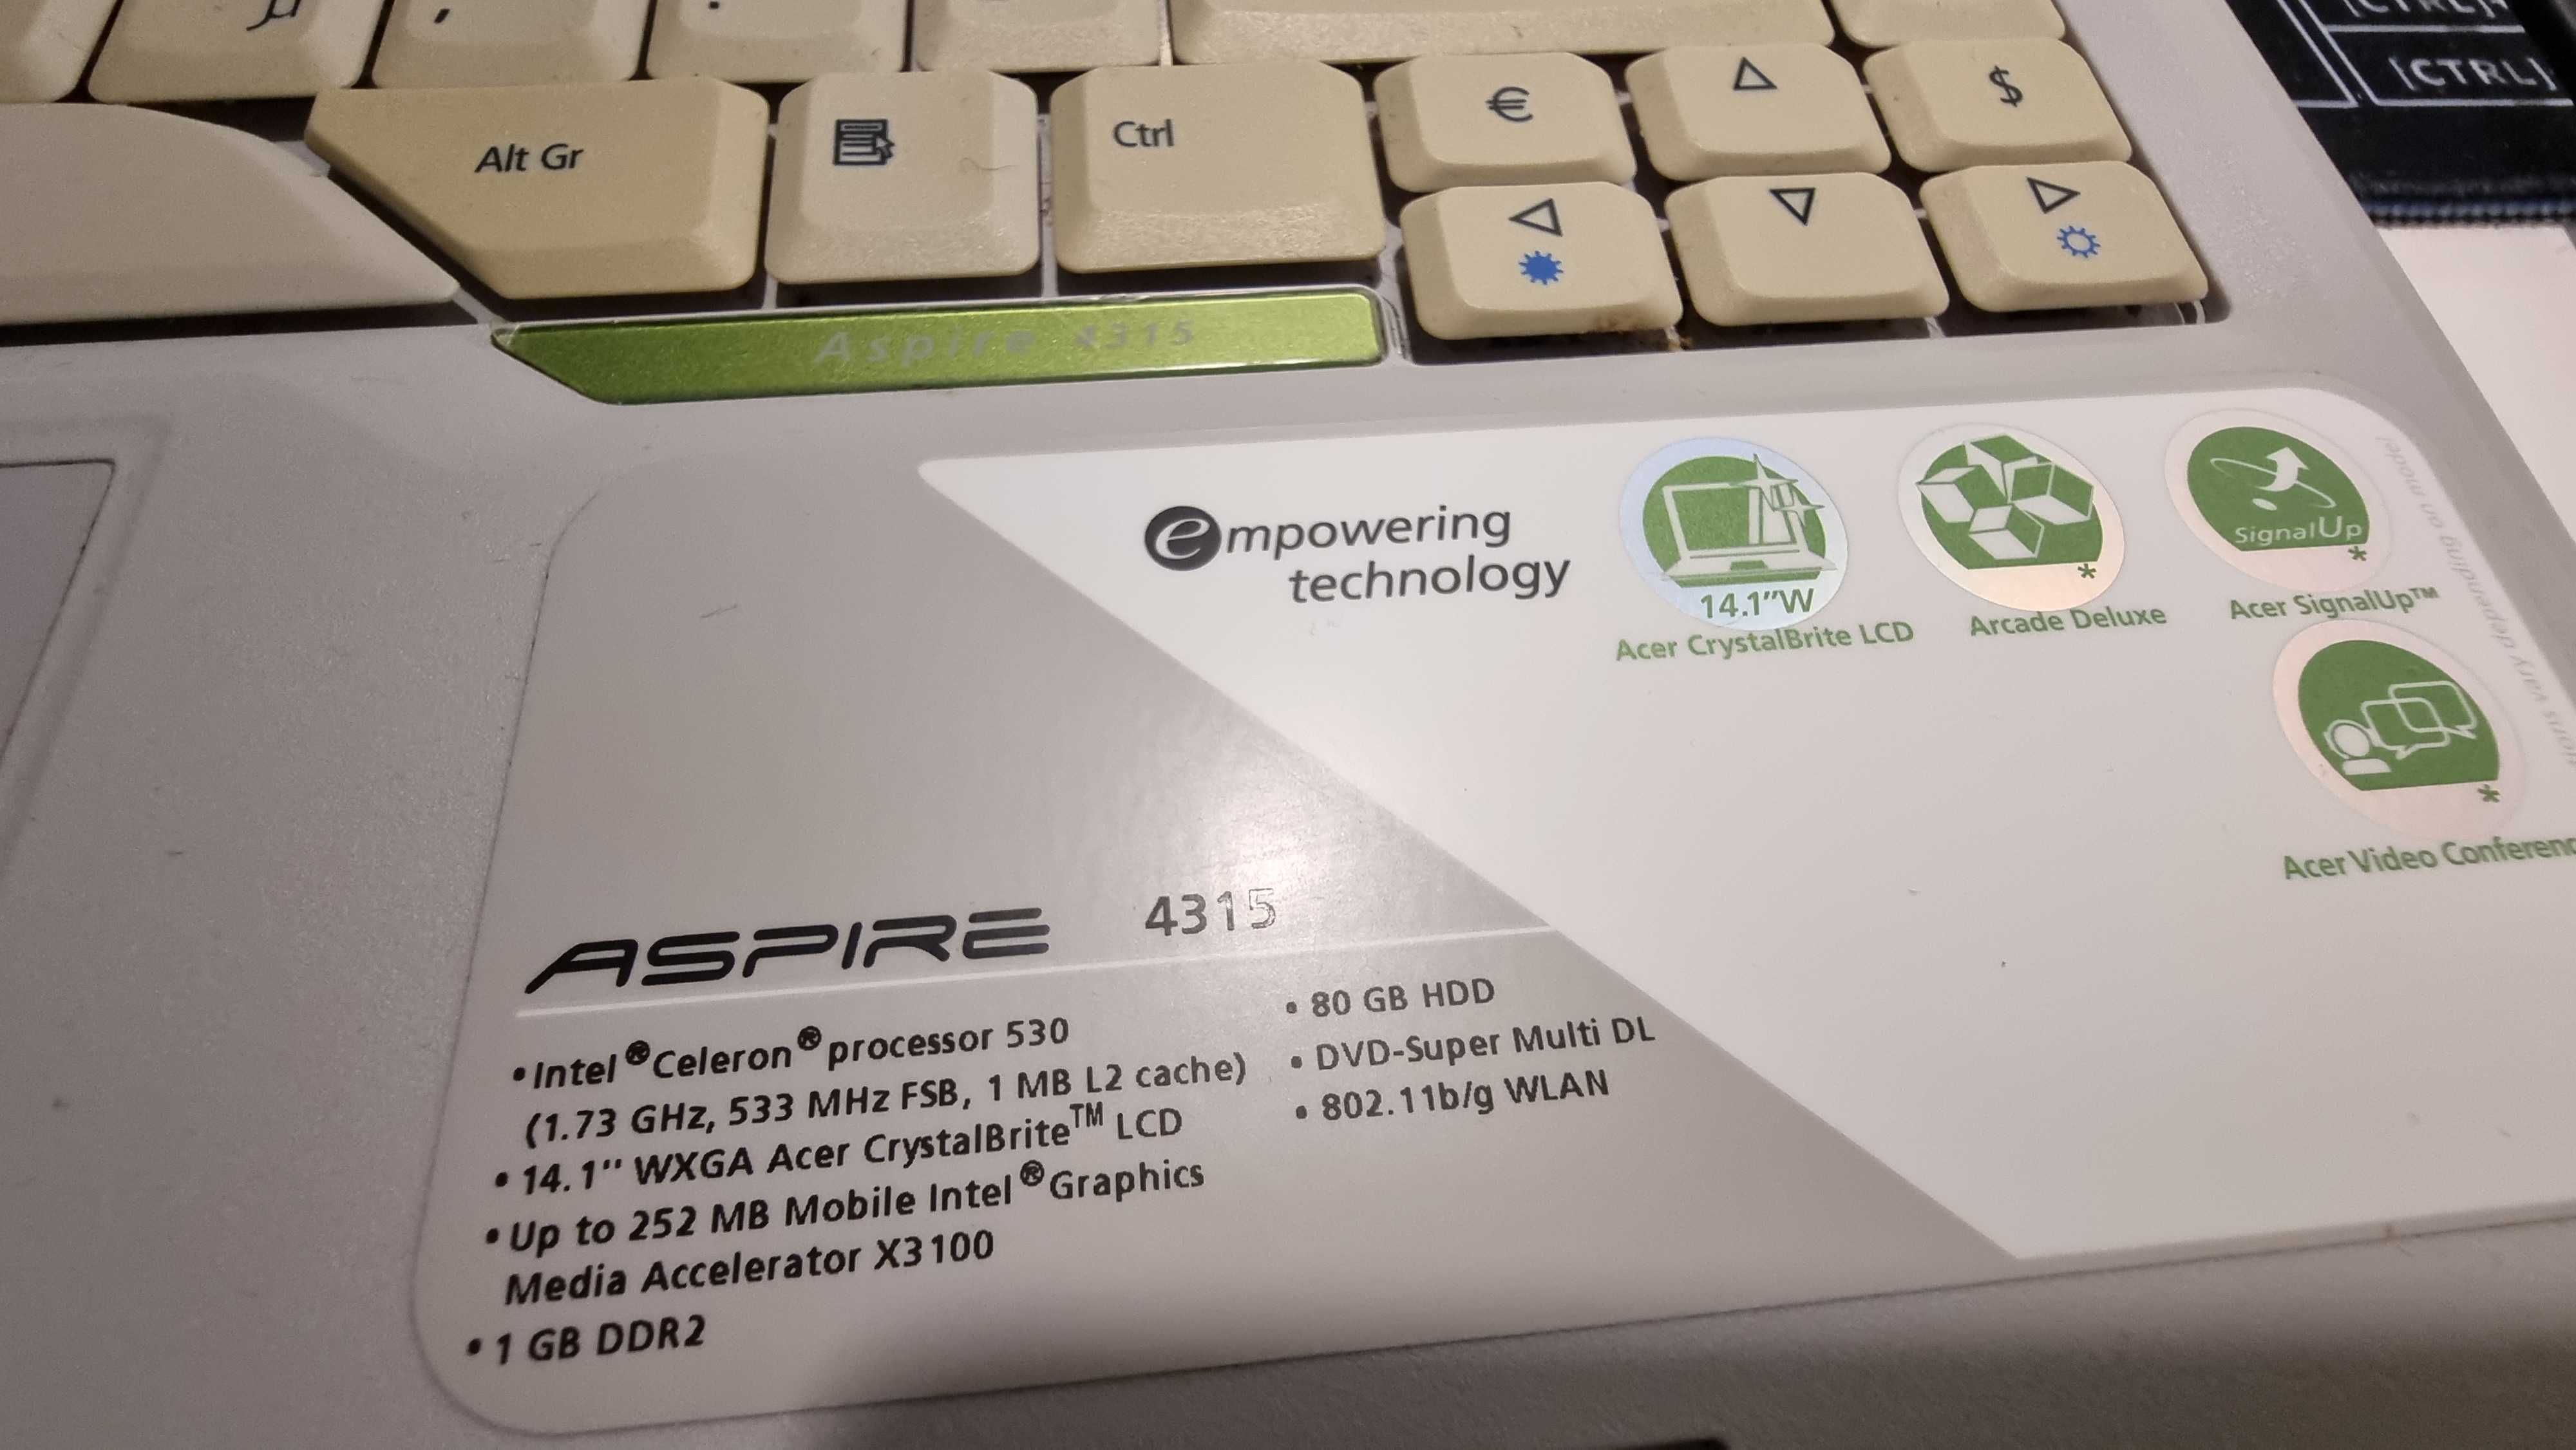 Acer Aspire 4315